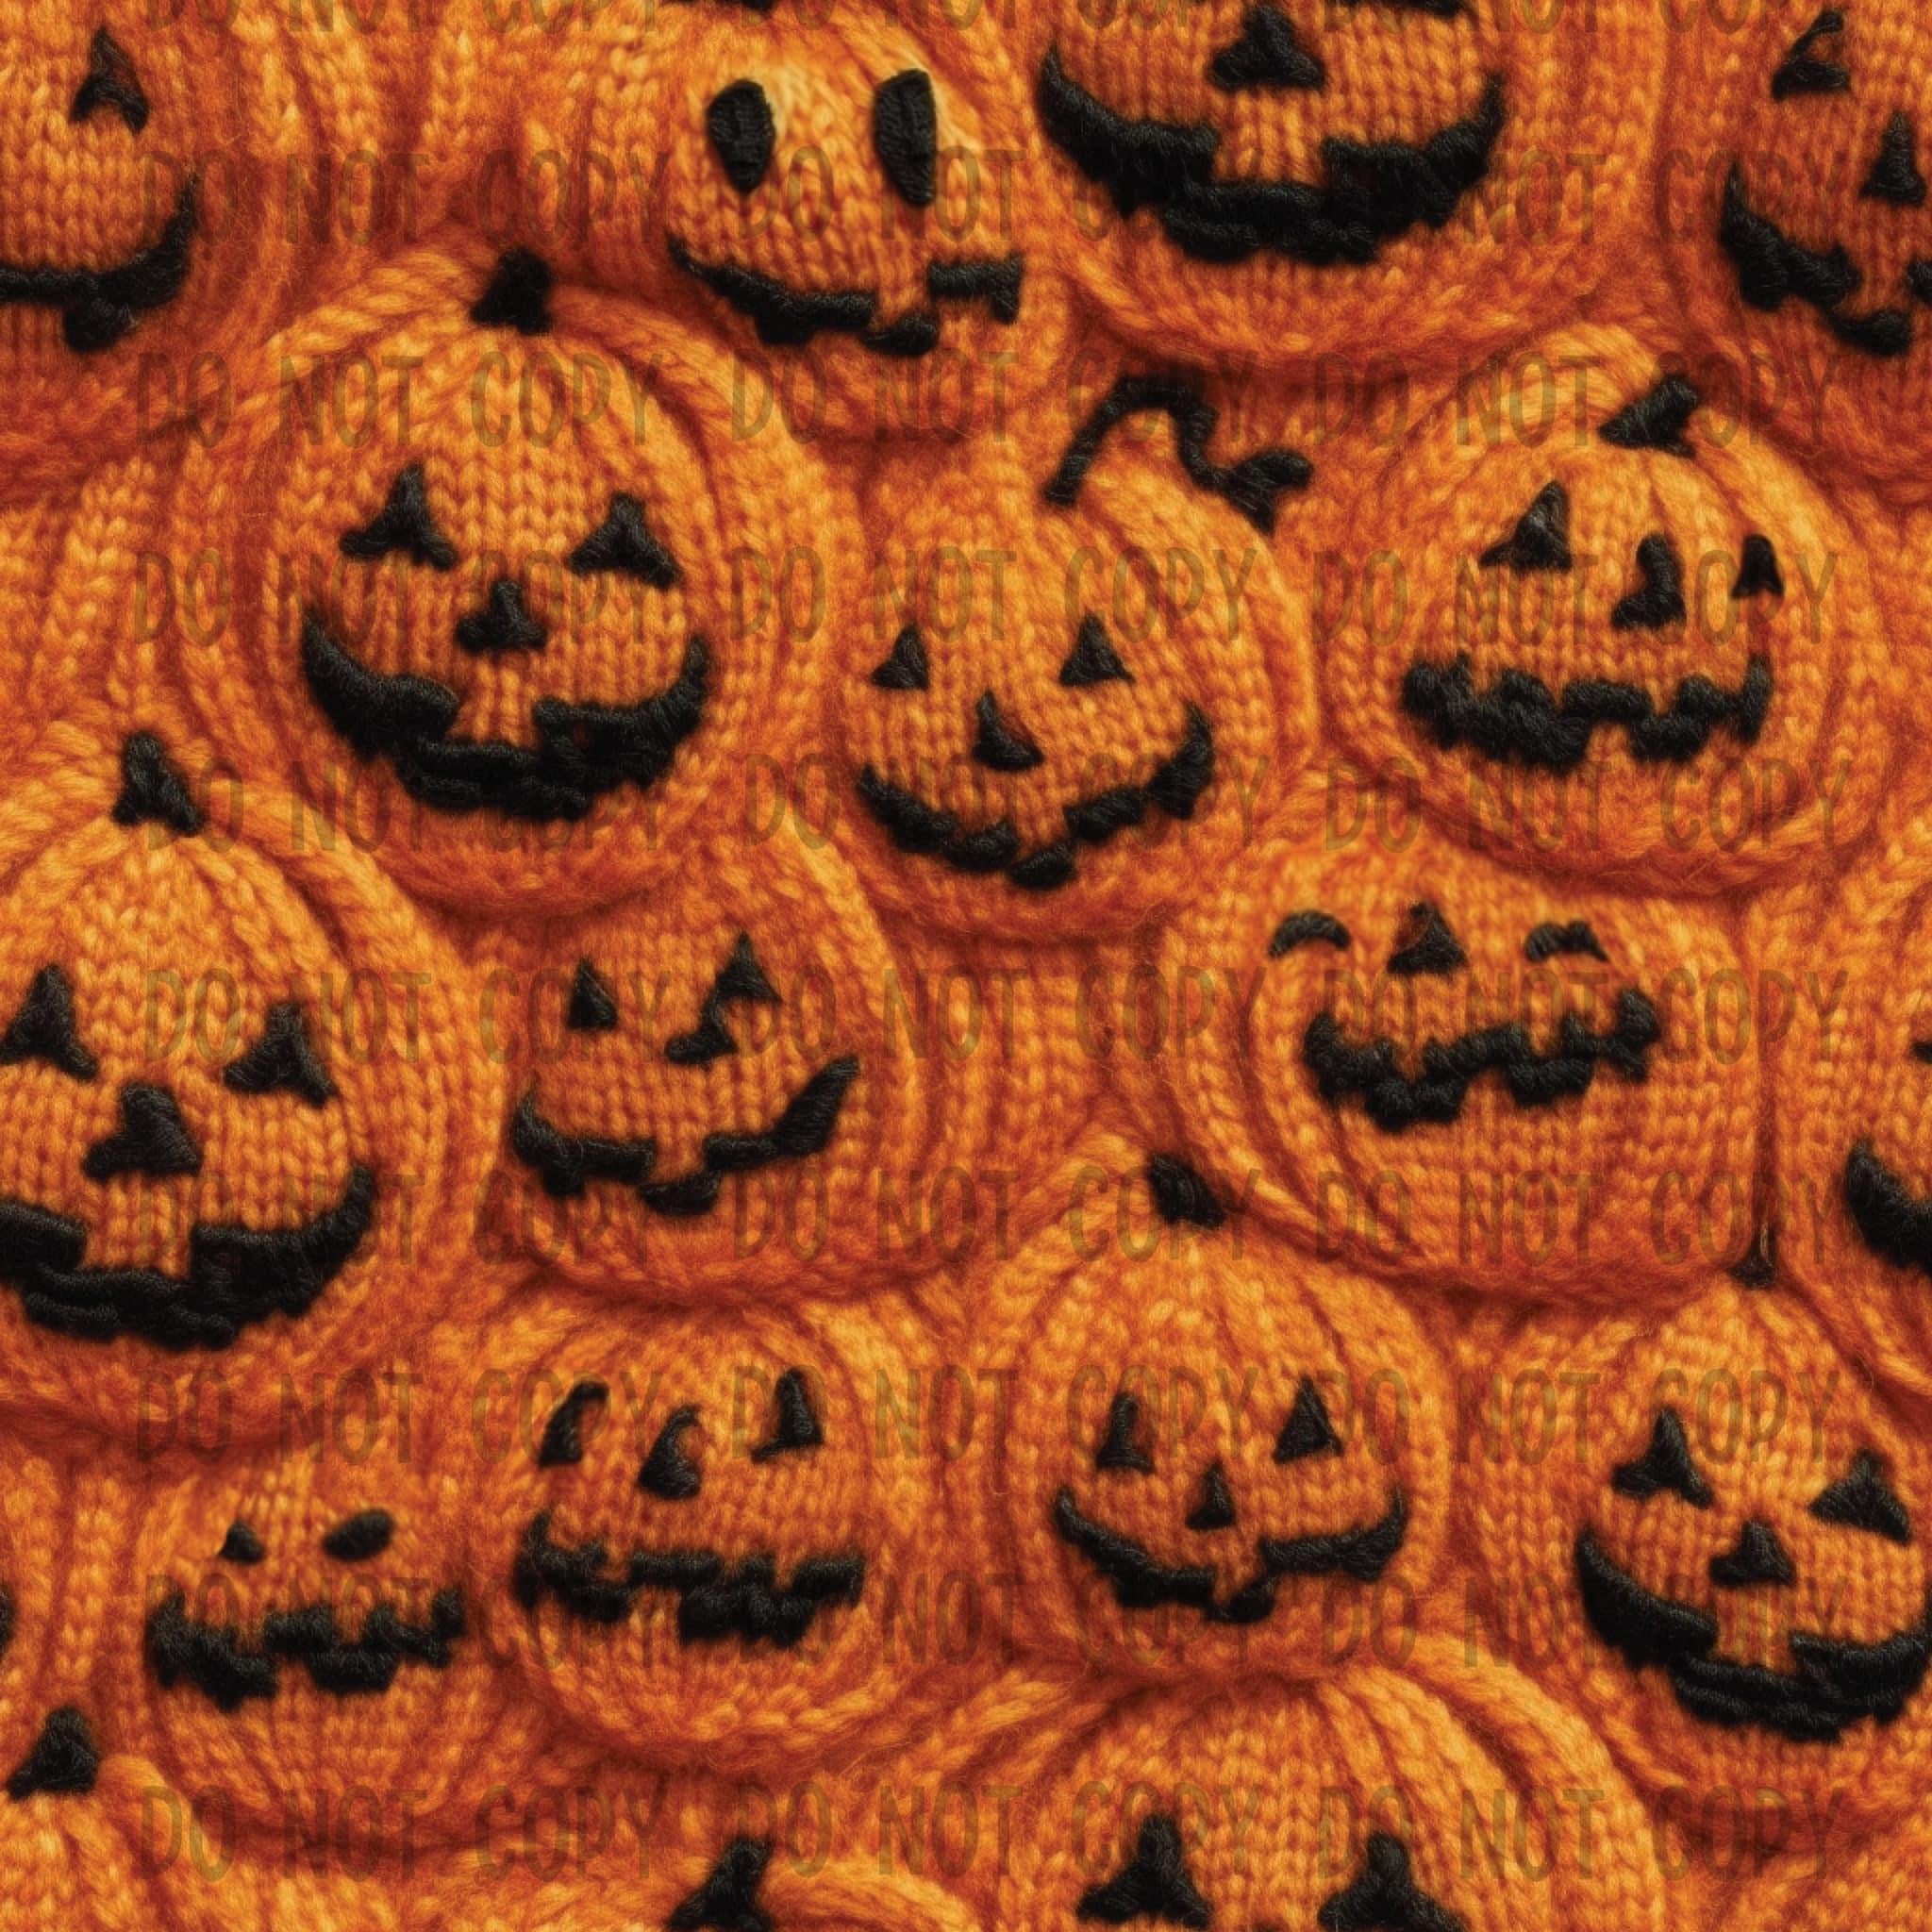 Pumpkin embroidery